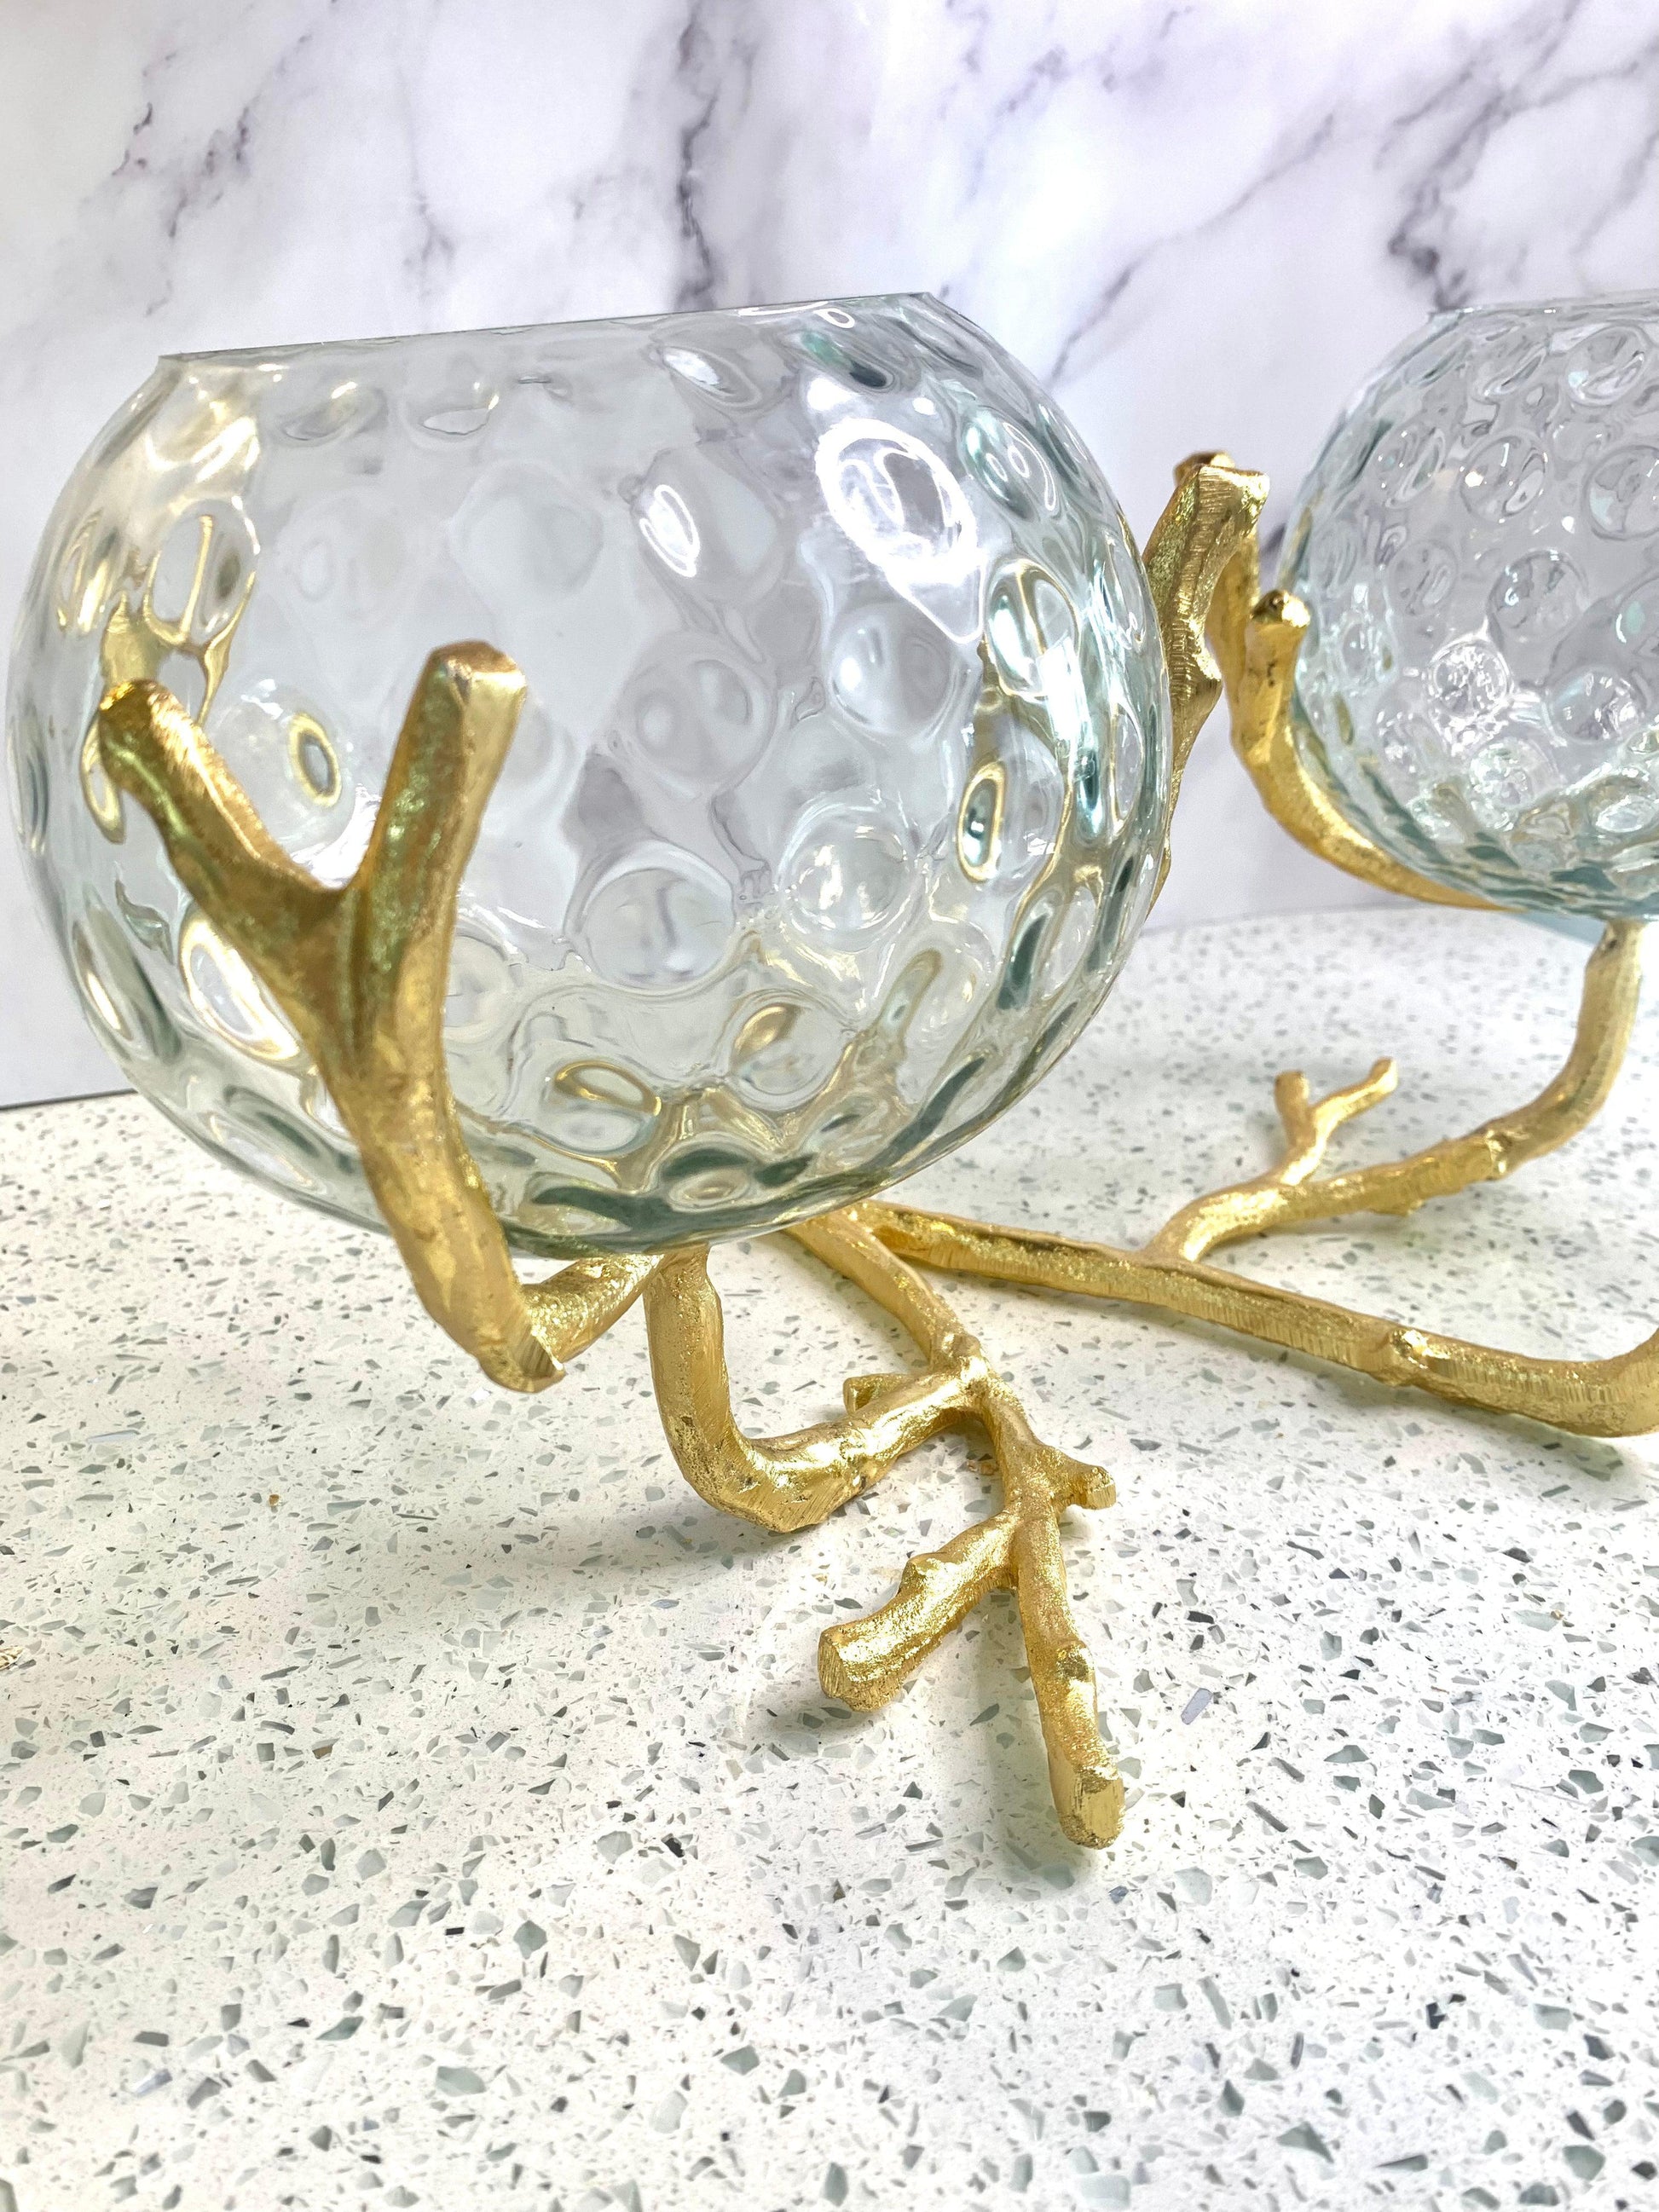 2 Glass Bowl on Gold Branch Holder Centerpiece Decorative Bowls High Class Touch - Home Decor 